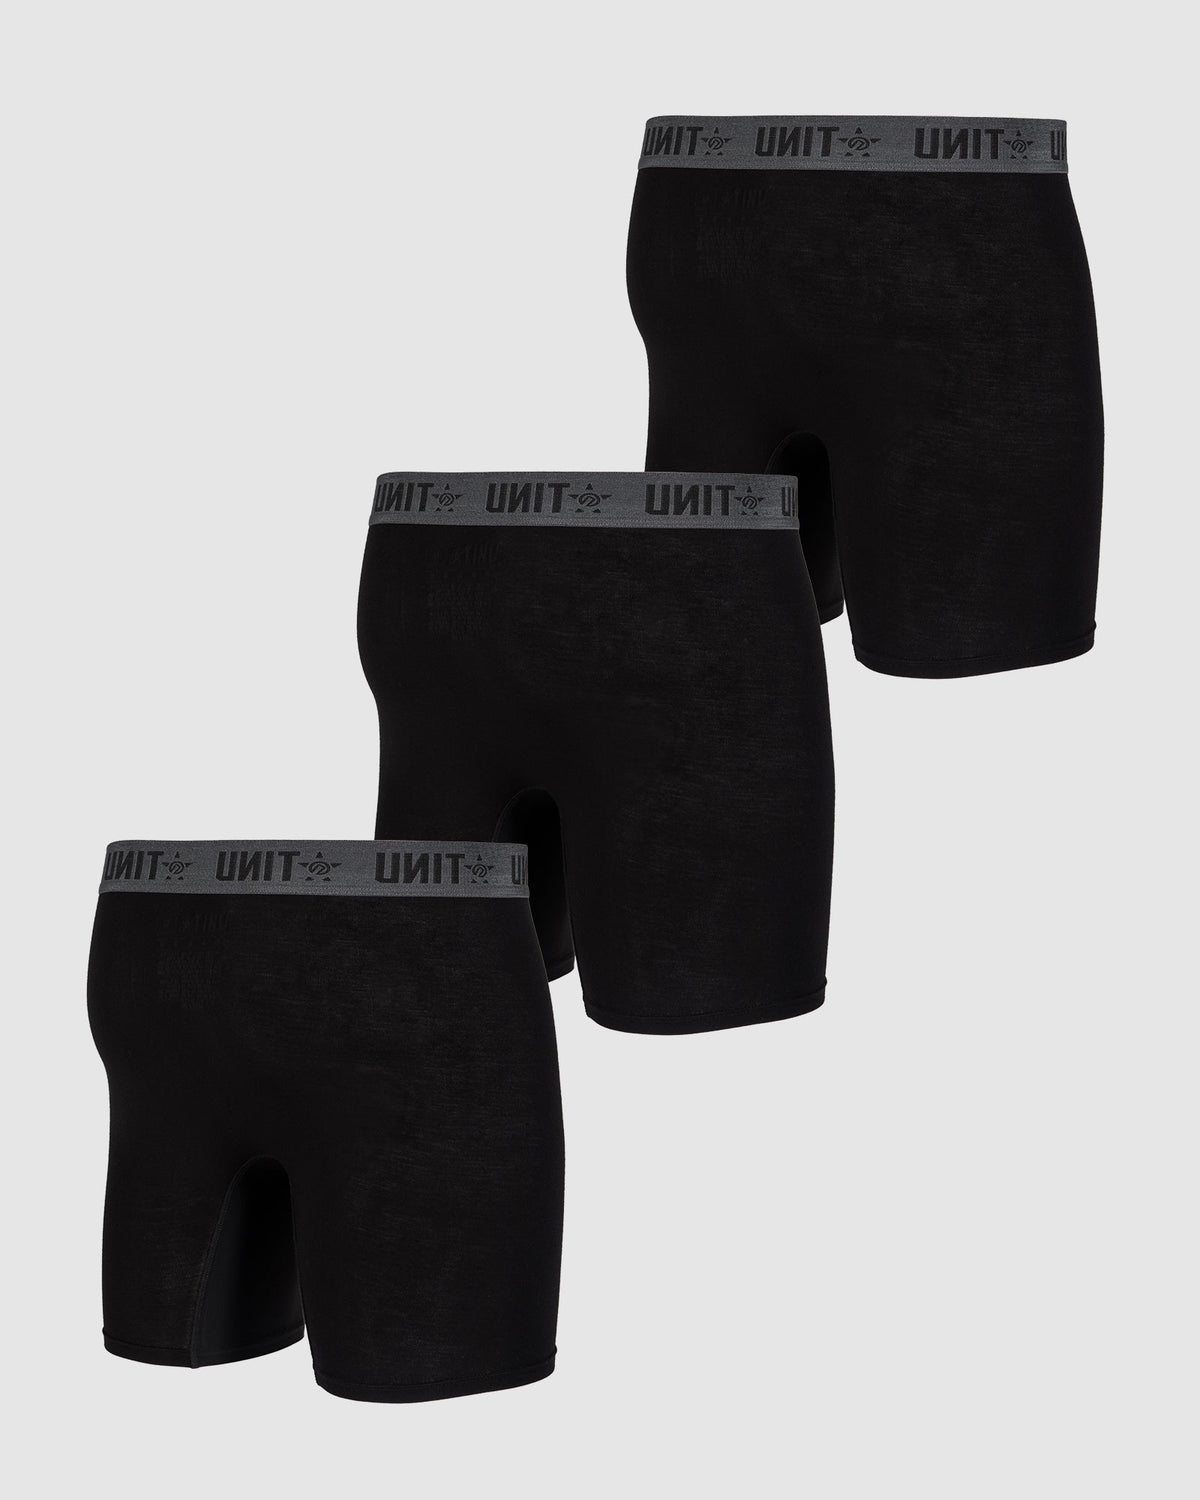 UNIT Bamboo Underwear Trunk - 3 Pack - Worklocker Australia